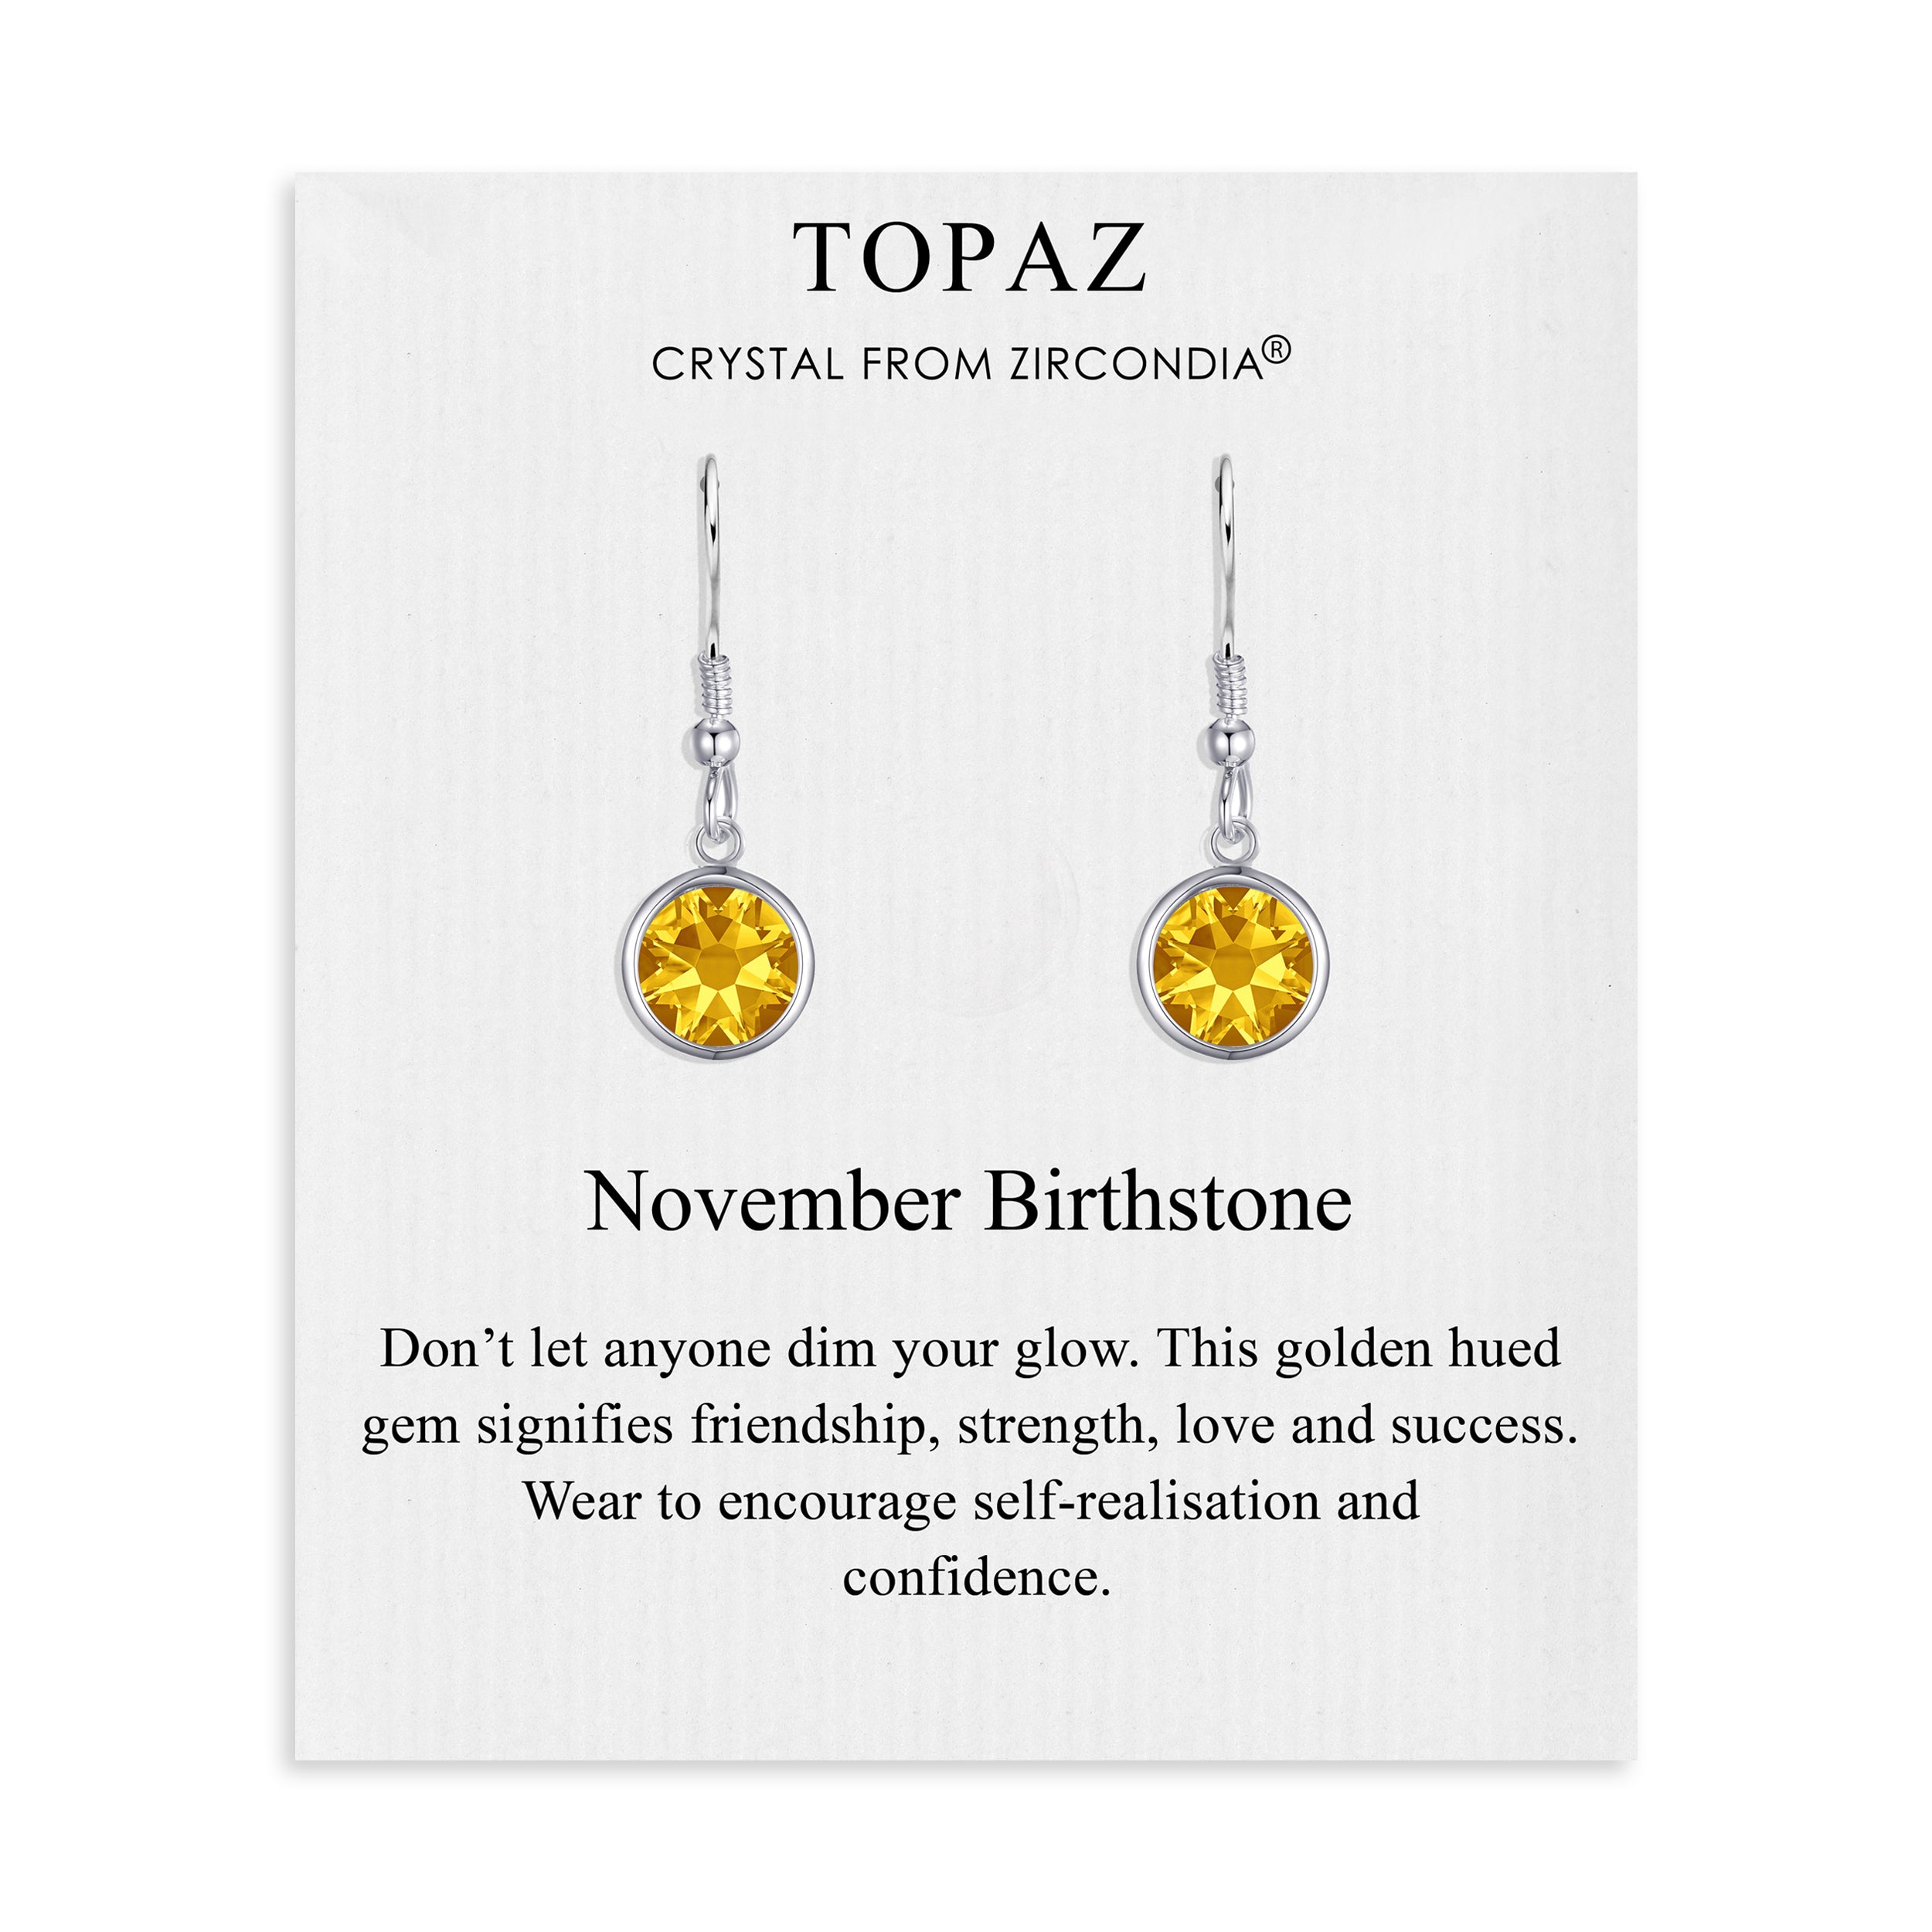 November Birthstone Drop Earrings Created with Topaz Zircondia® Crystals by Philip Jones Jewellery